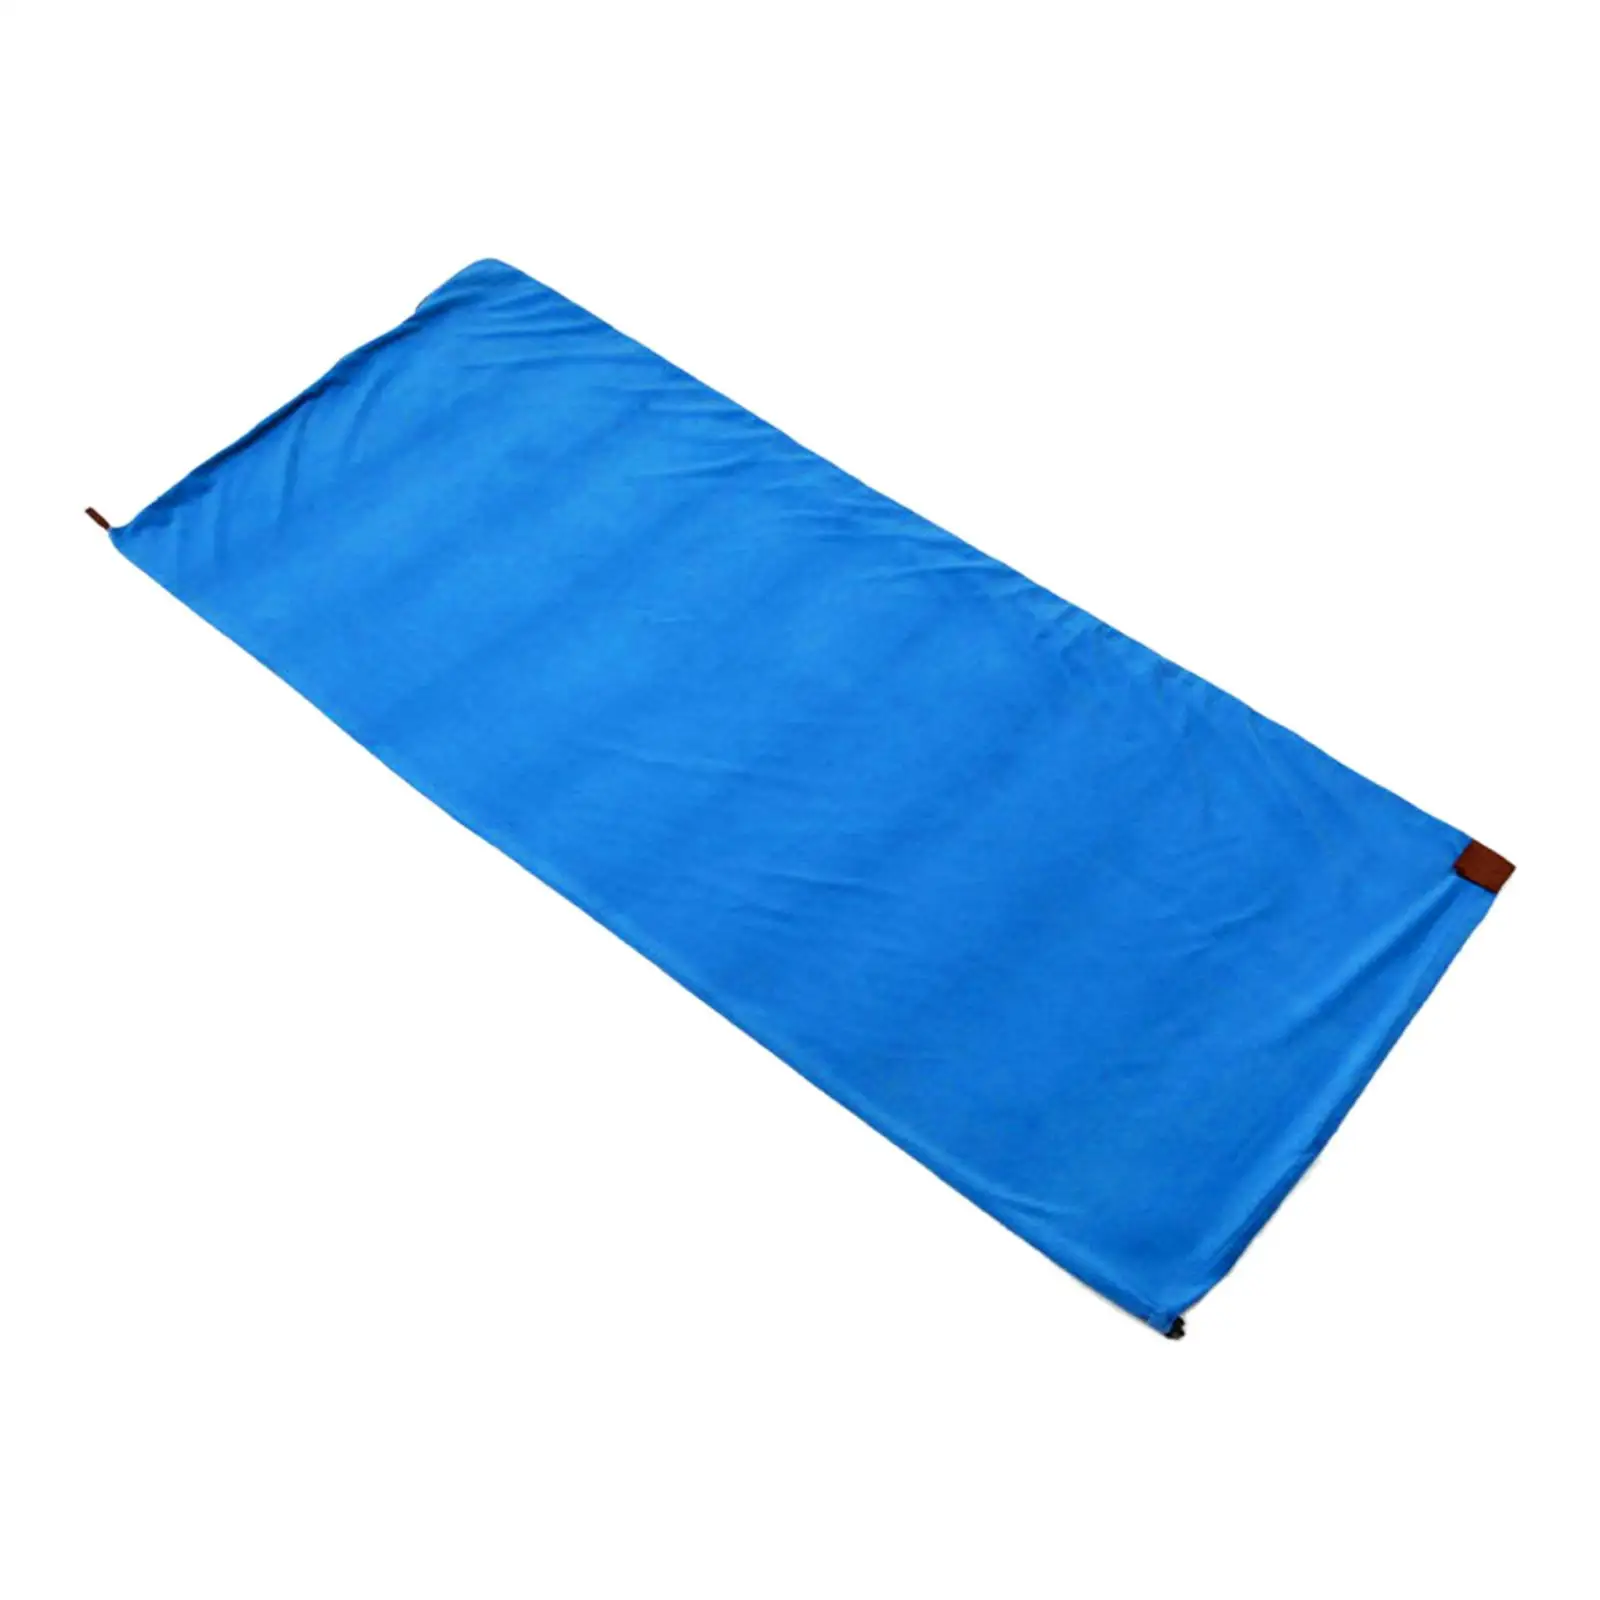 Camping blanket sleeping bag liner for business fishing running picnic